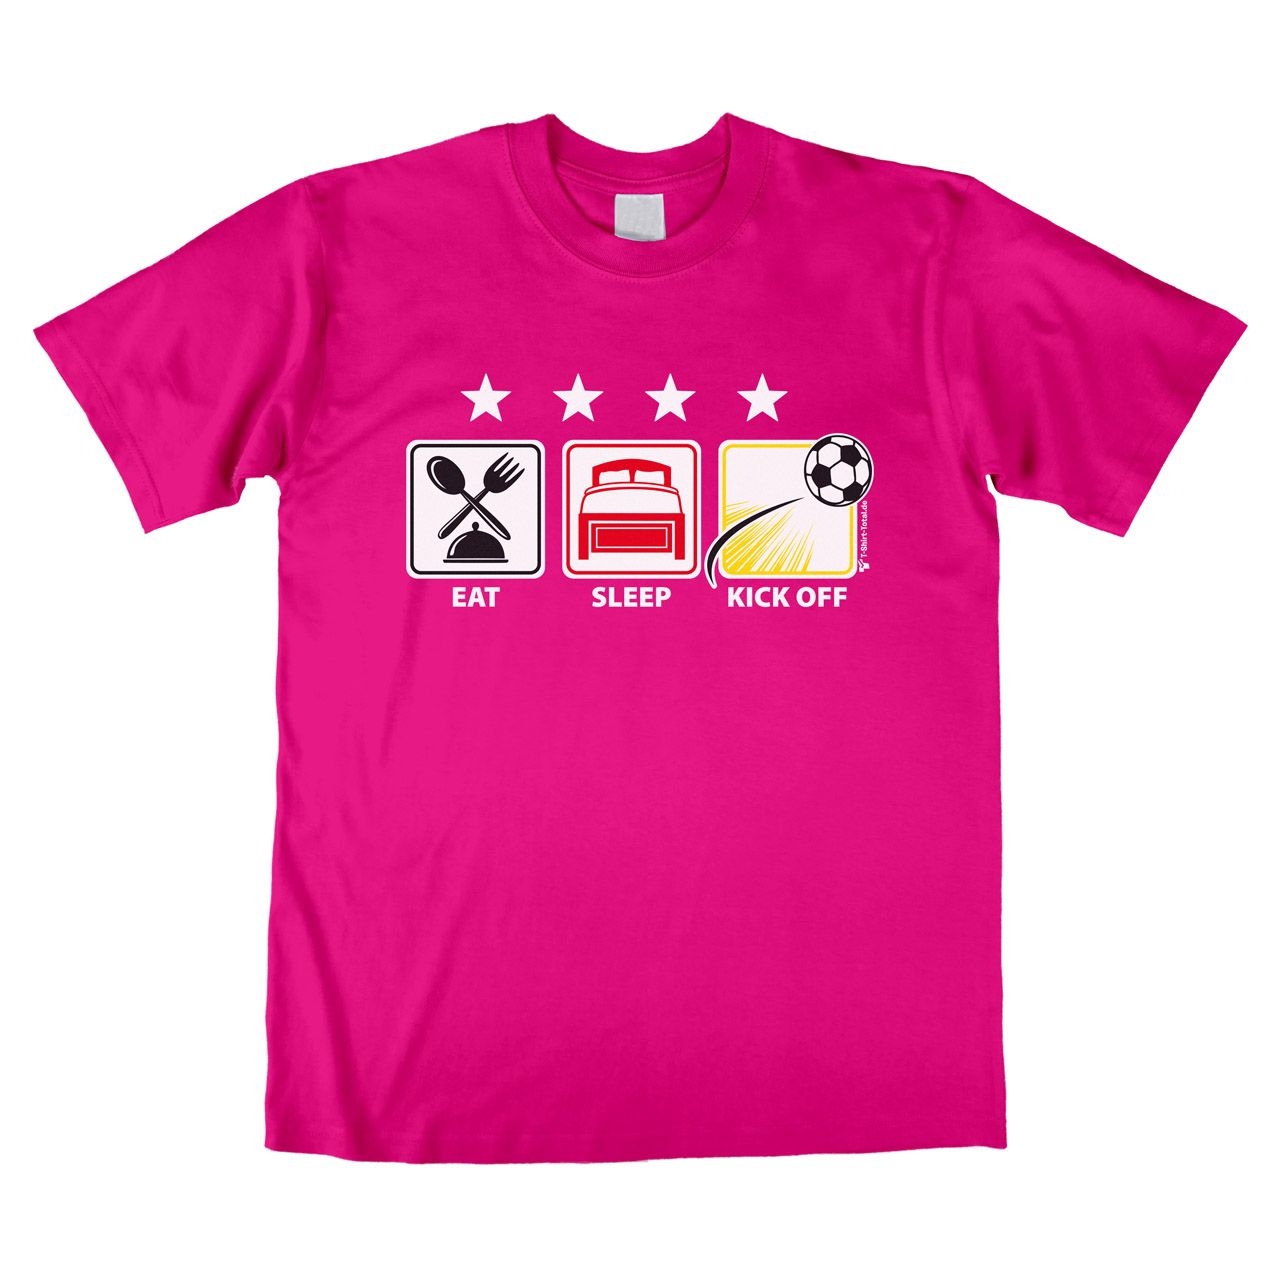 Eat Sleep Kick off Unisex T-Shirt pink Extra Small